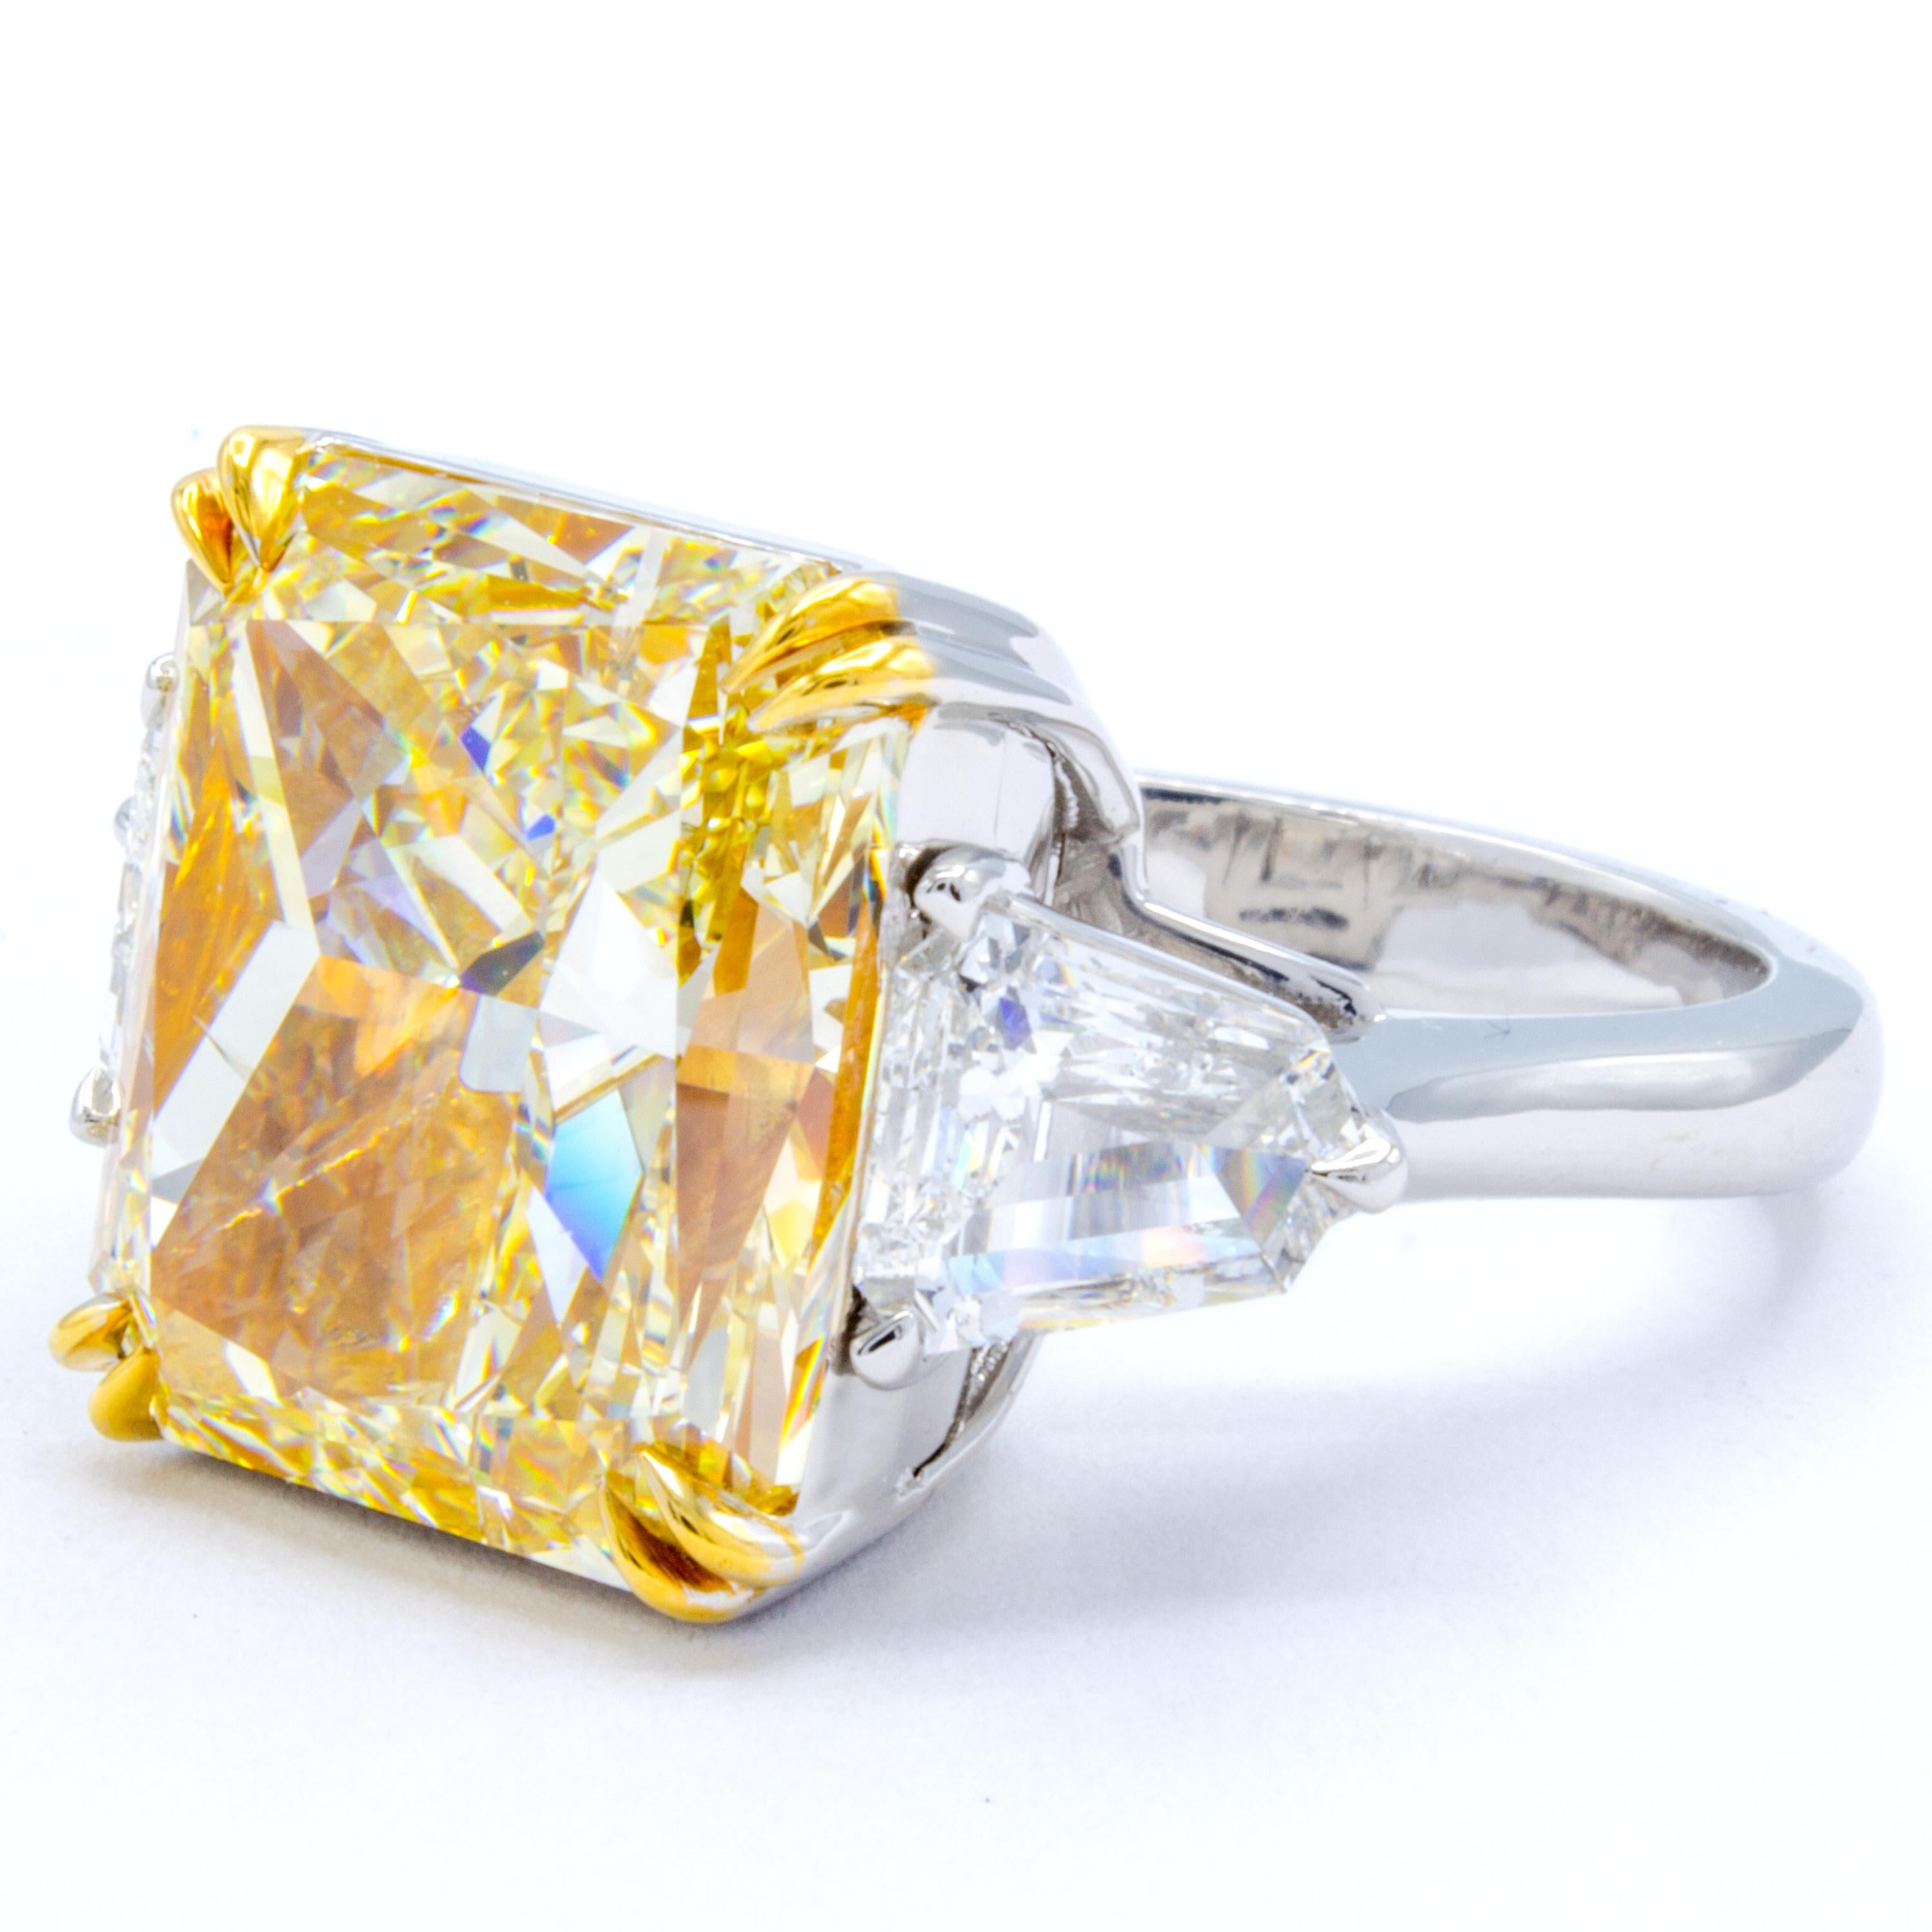 Modern David Rosenberg 13.03 Carat Radiant Light Yellow VS2 GIA Diamond Ring